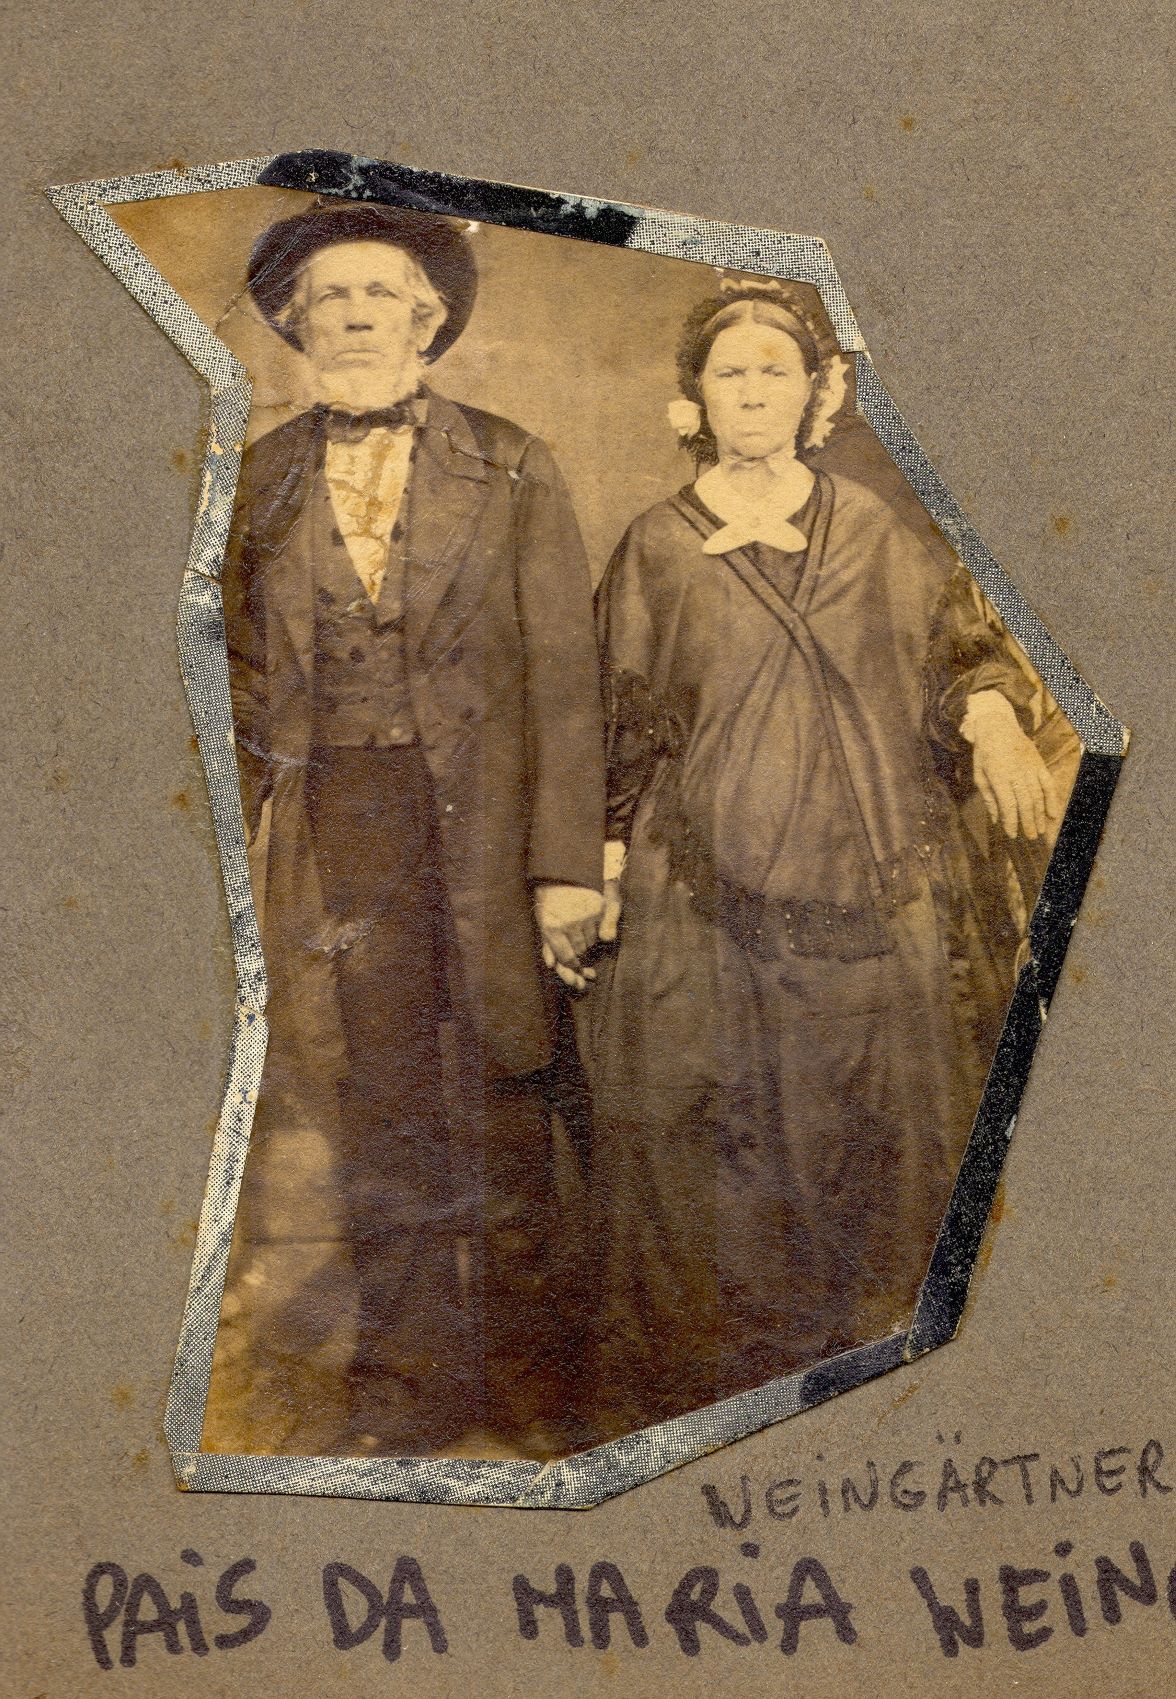 Miguel Weingärtner and Anna Catharina Heil, parents of Maria Weingärtner, Radamés' maternal grandmother.